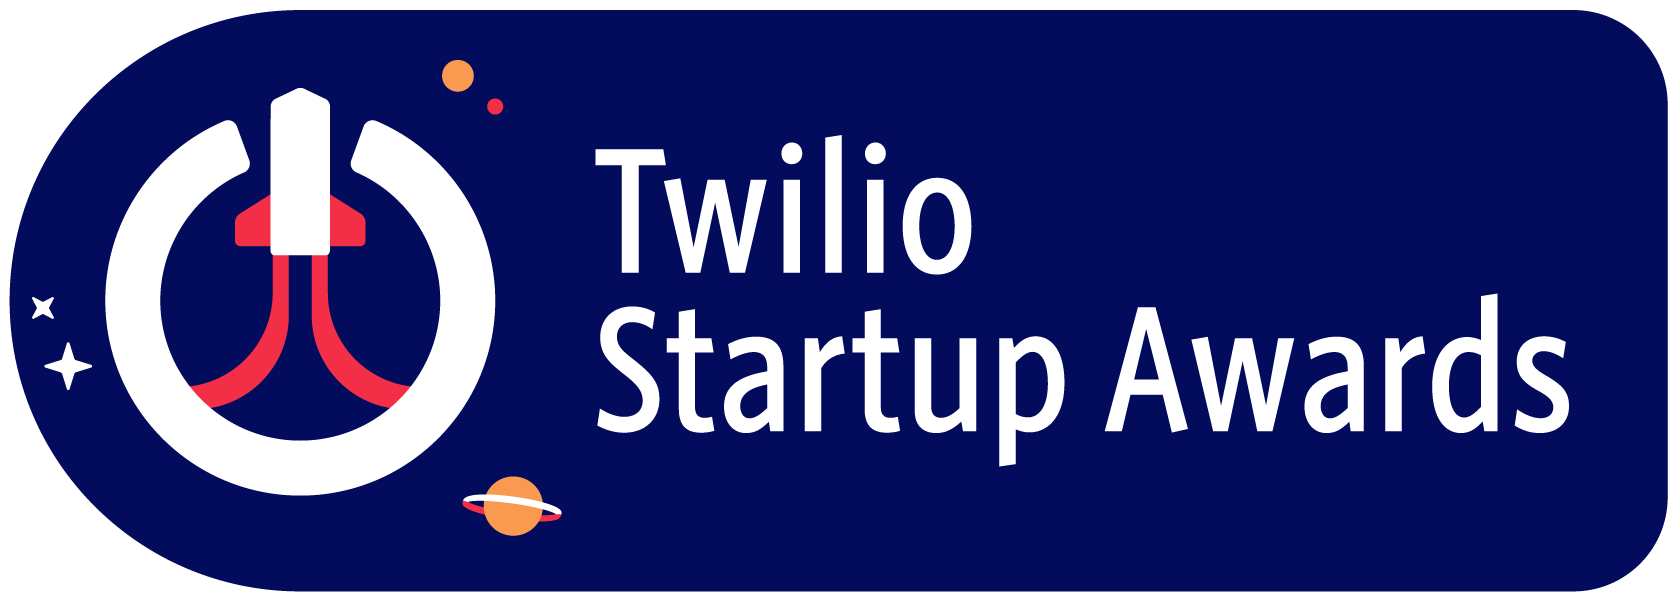 Twilio Startup Awards